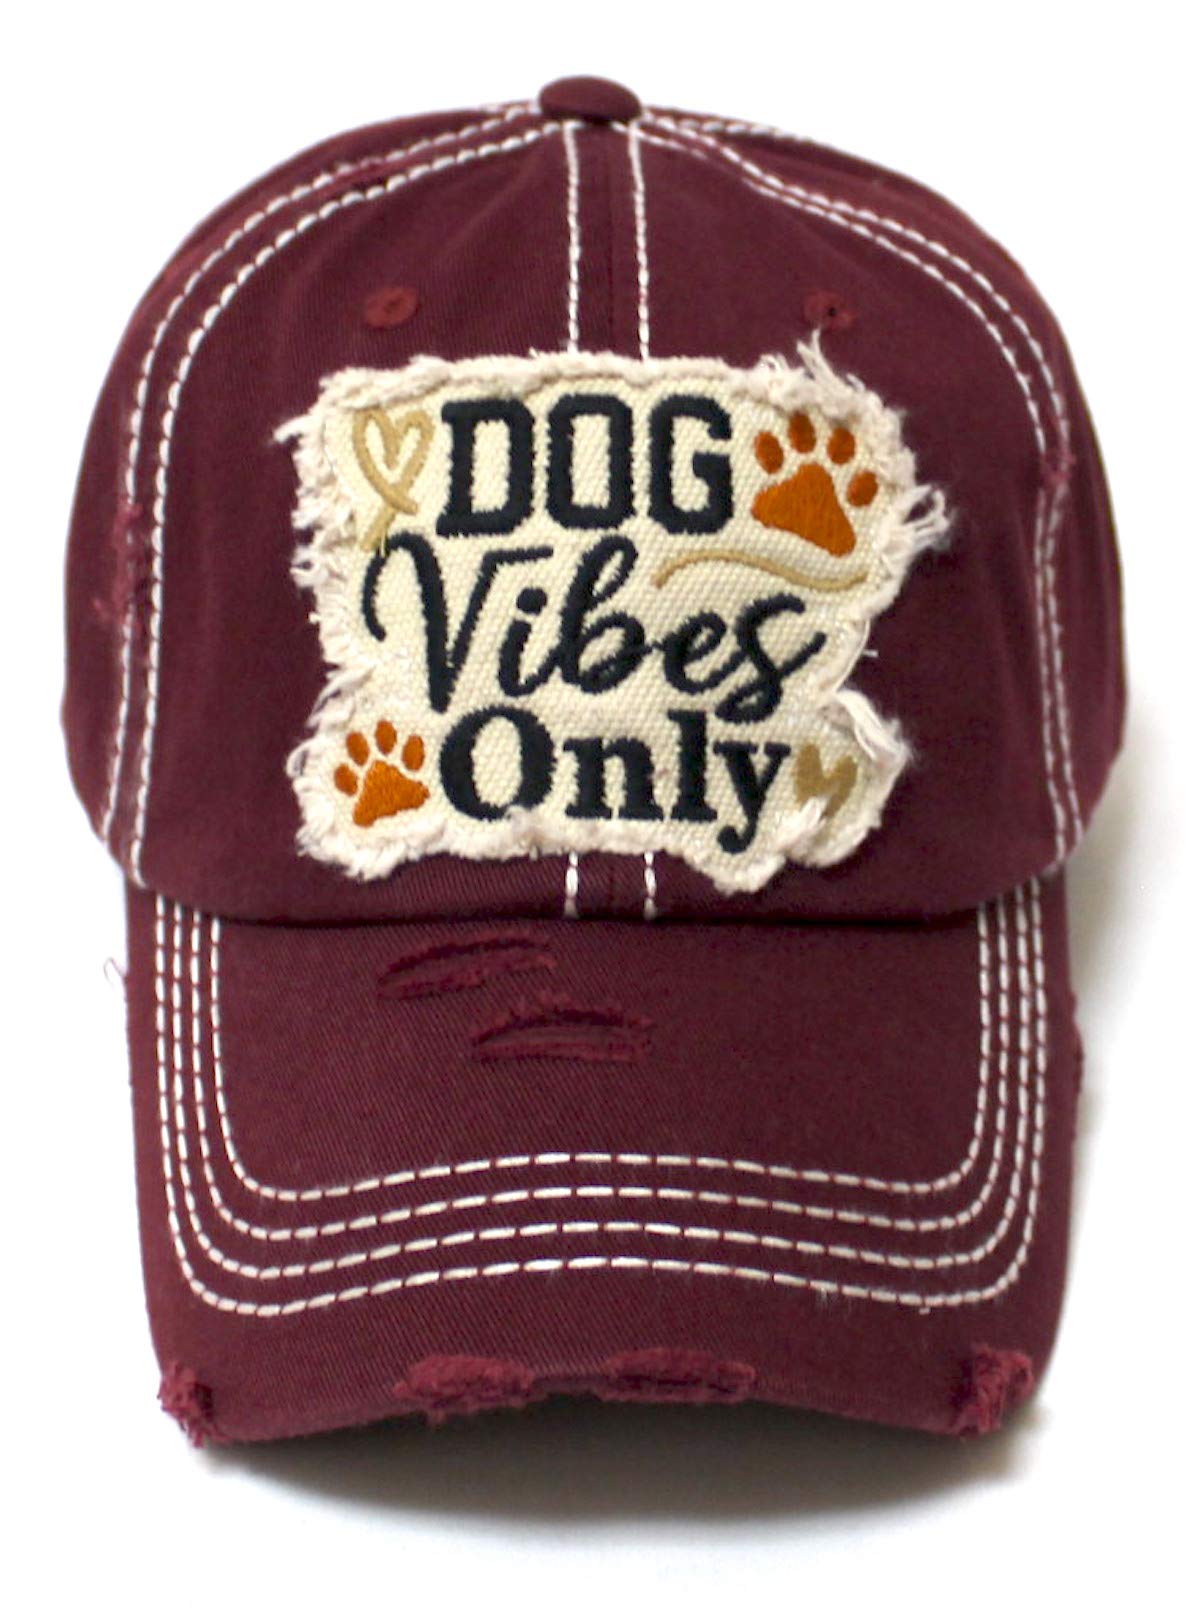 Classic Distressed Adjustable Baseball Cap Dog Vibes Only Hearts, Paws & Bone Monogram Hat, Wine Burgundy - Caps 'N Vintage 